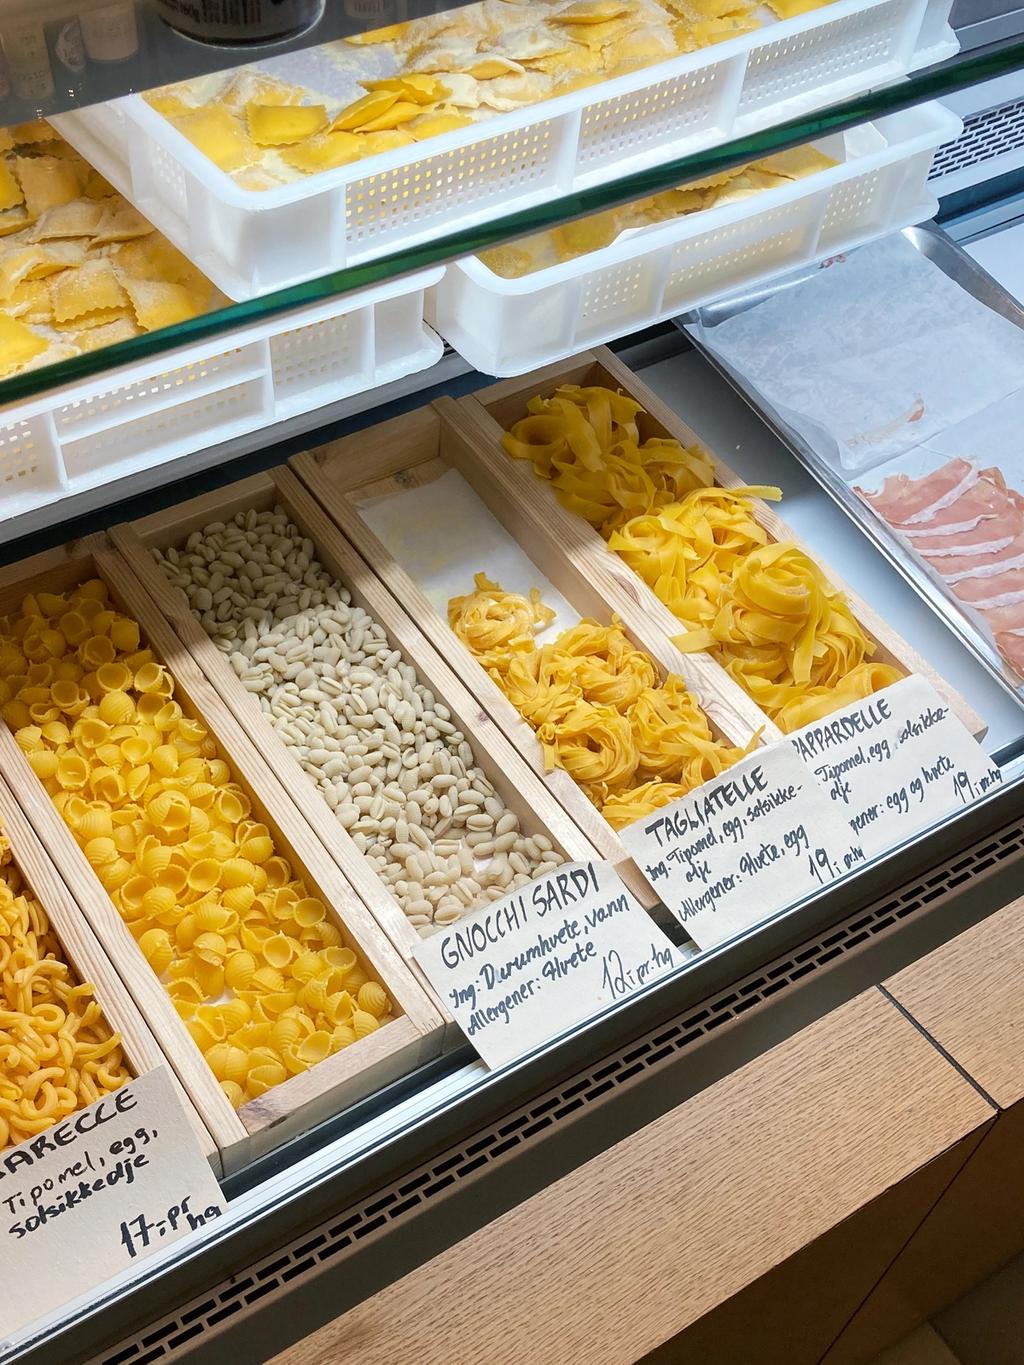 Fersk pasta, men også mer til hos Pasta Fresca. Foto: Jørgen Brynhildsvoll